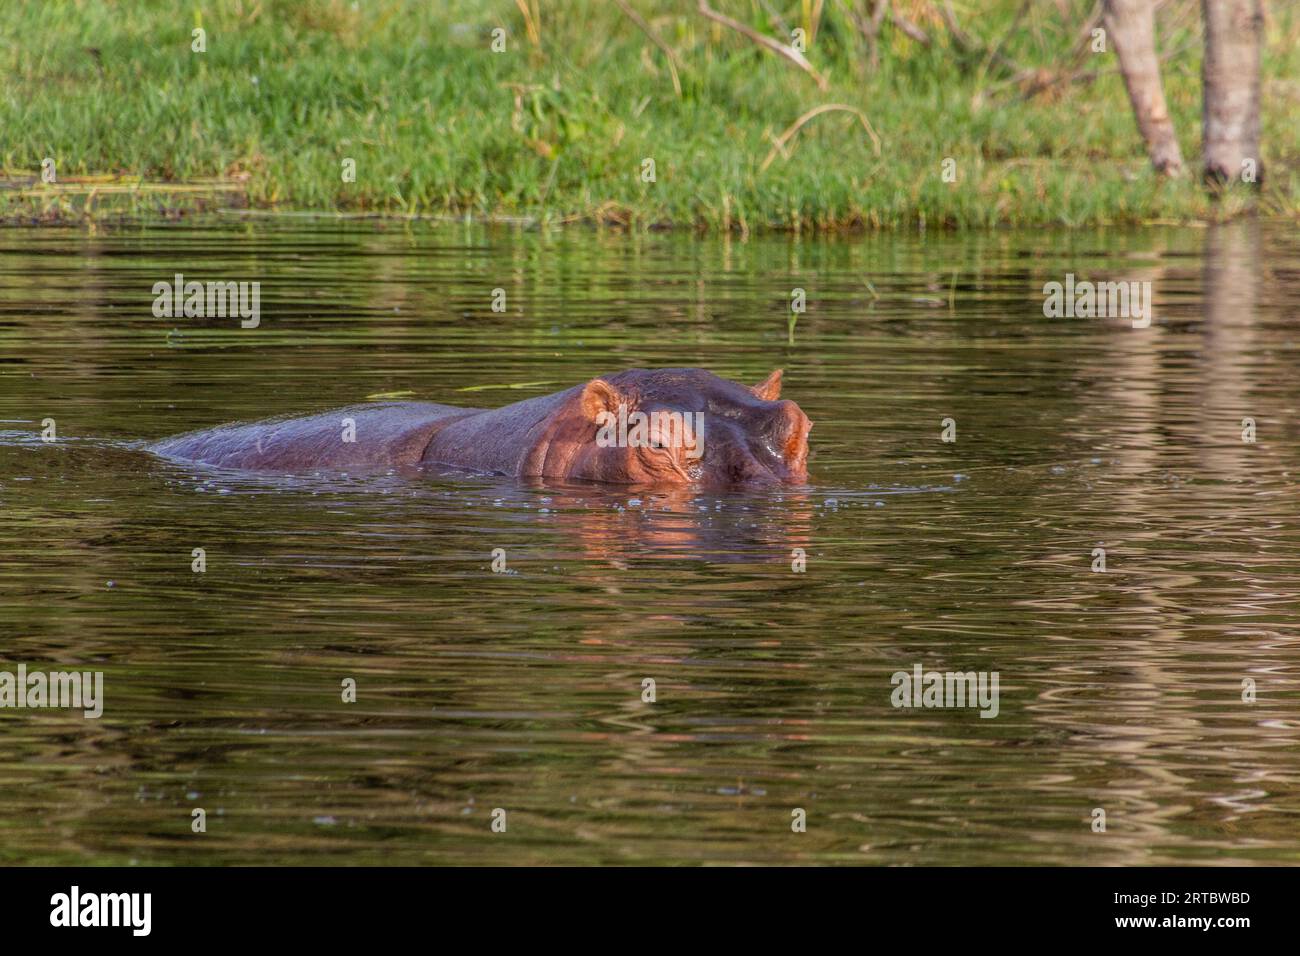 View of Hippopotamus (Hippopotamus amphibius) in Awassa lake, Ethiopia Stock Photo